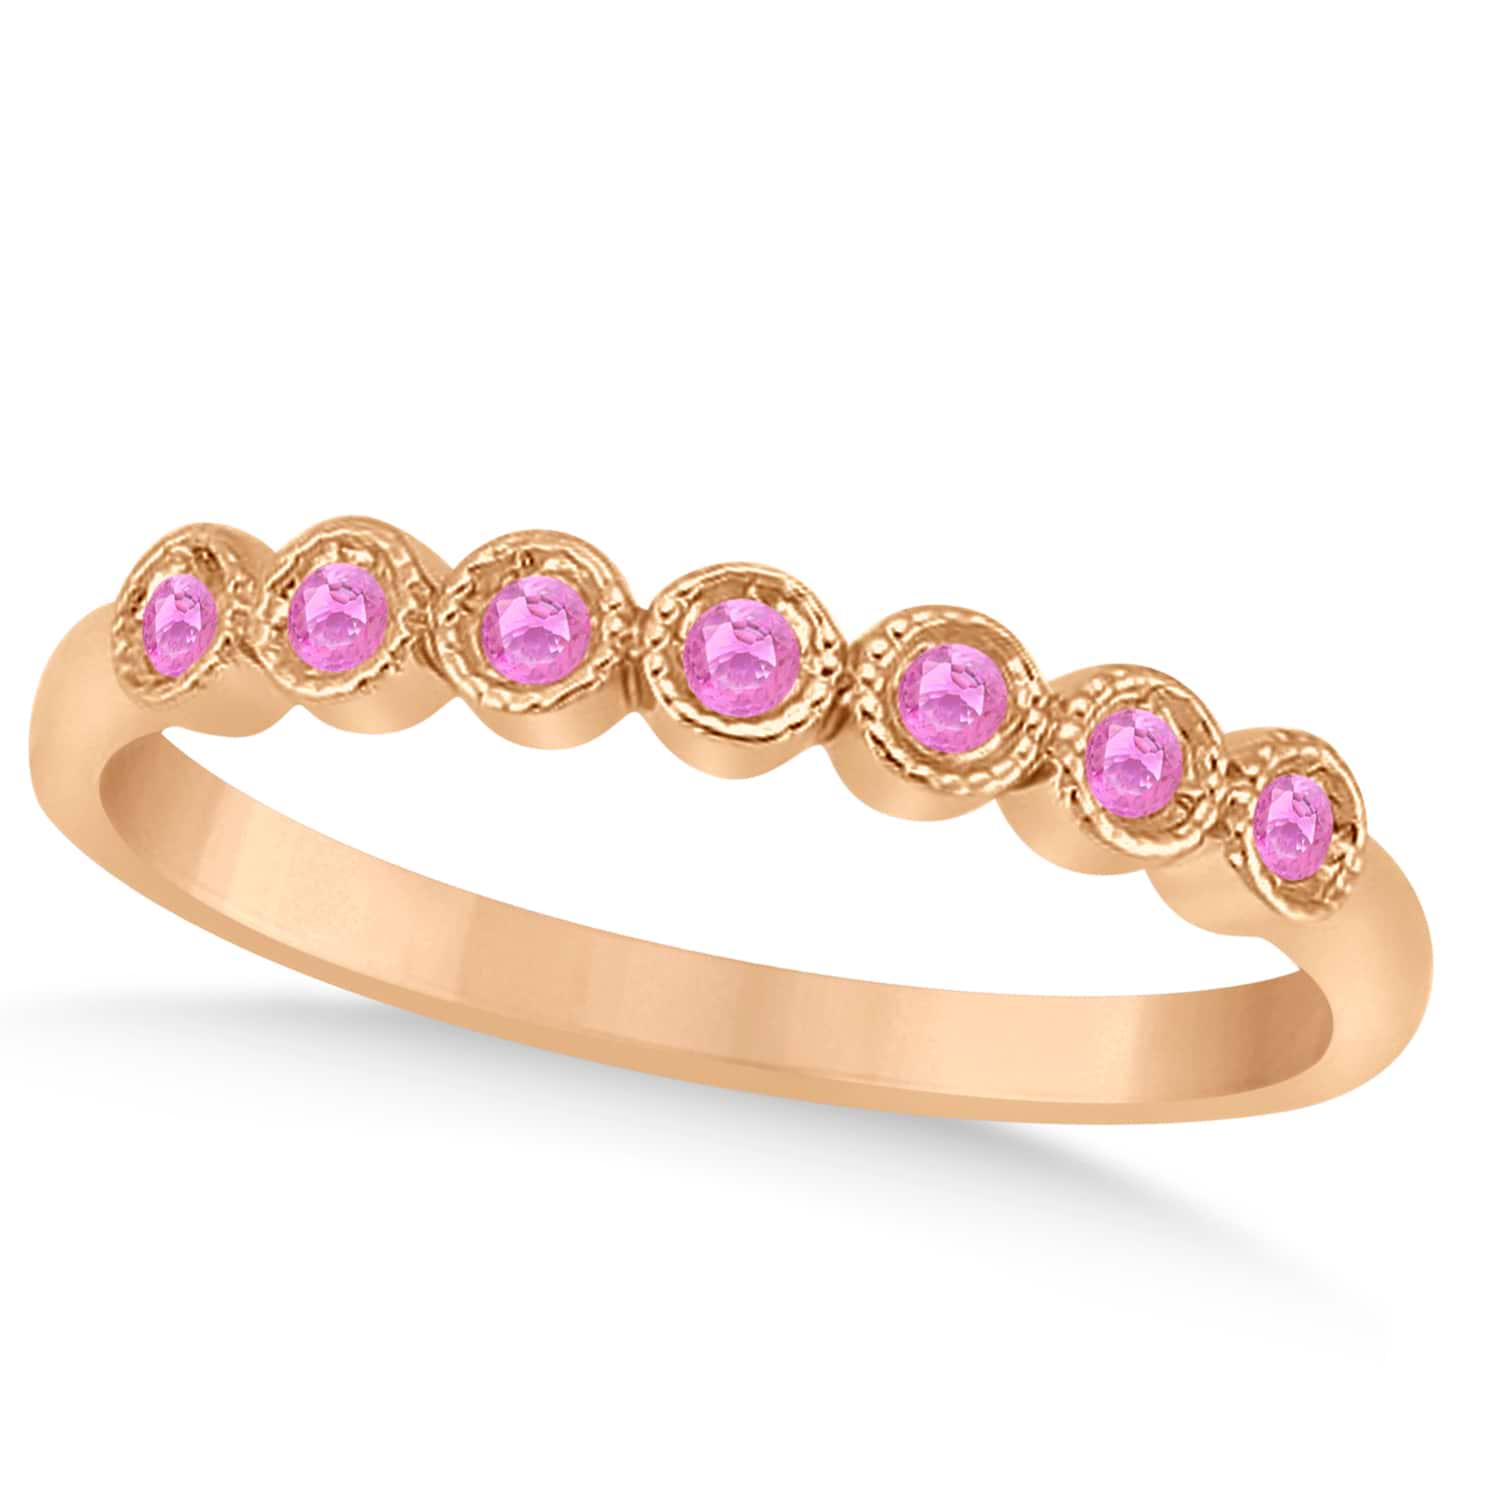 Pink Sapphire Bezel Set Wedding Band 14k Rose Gold 0.10ct